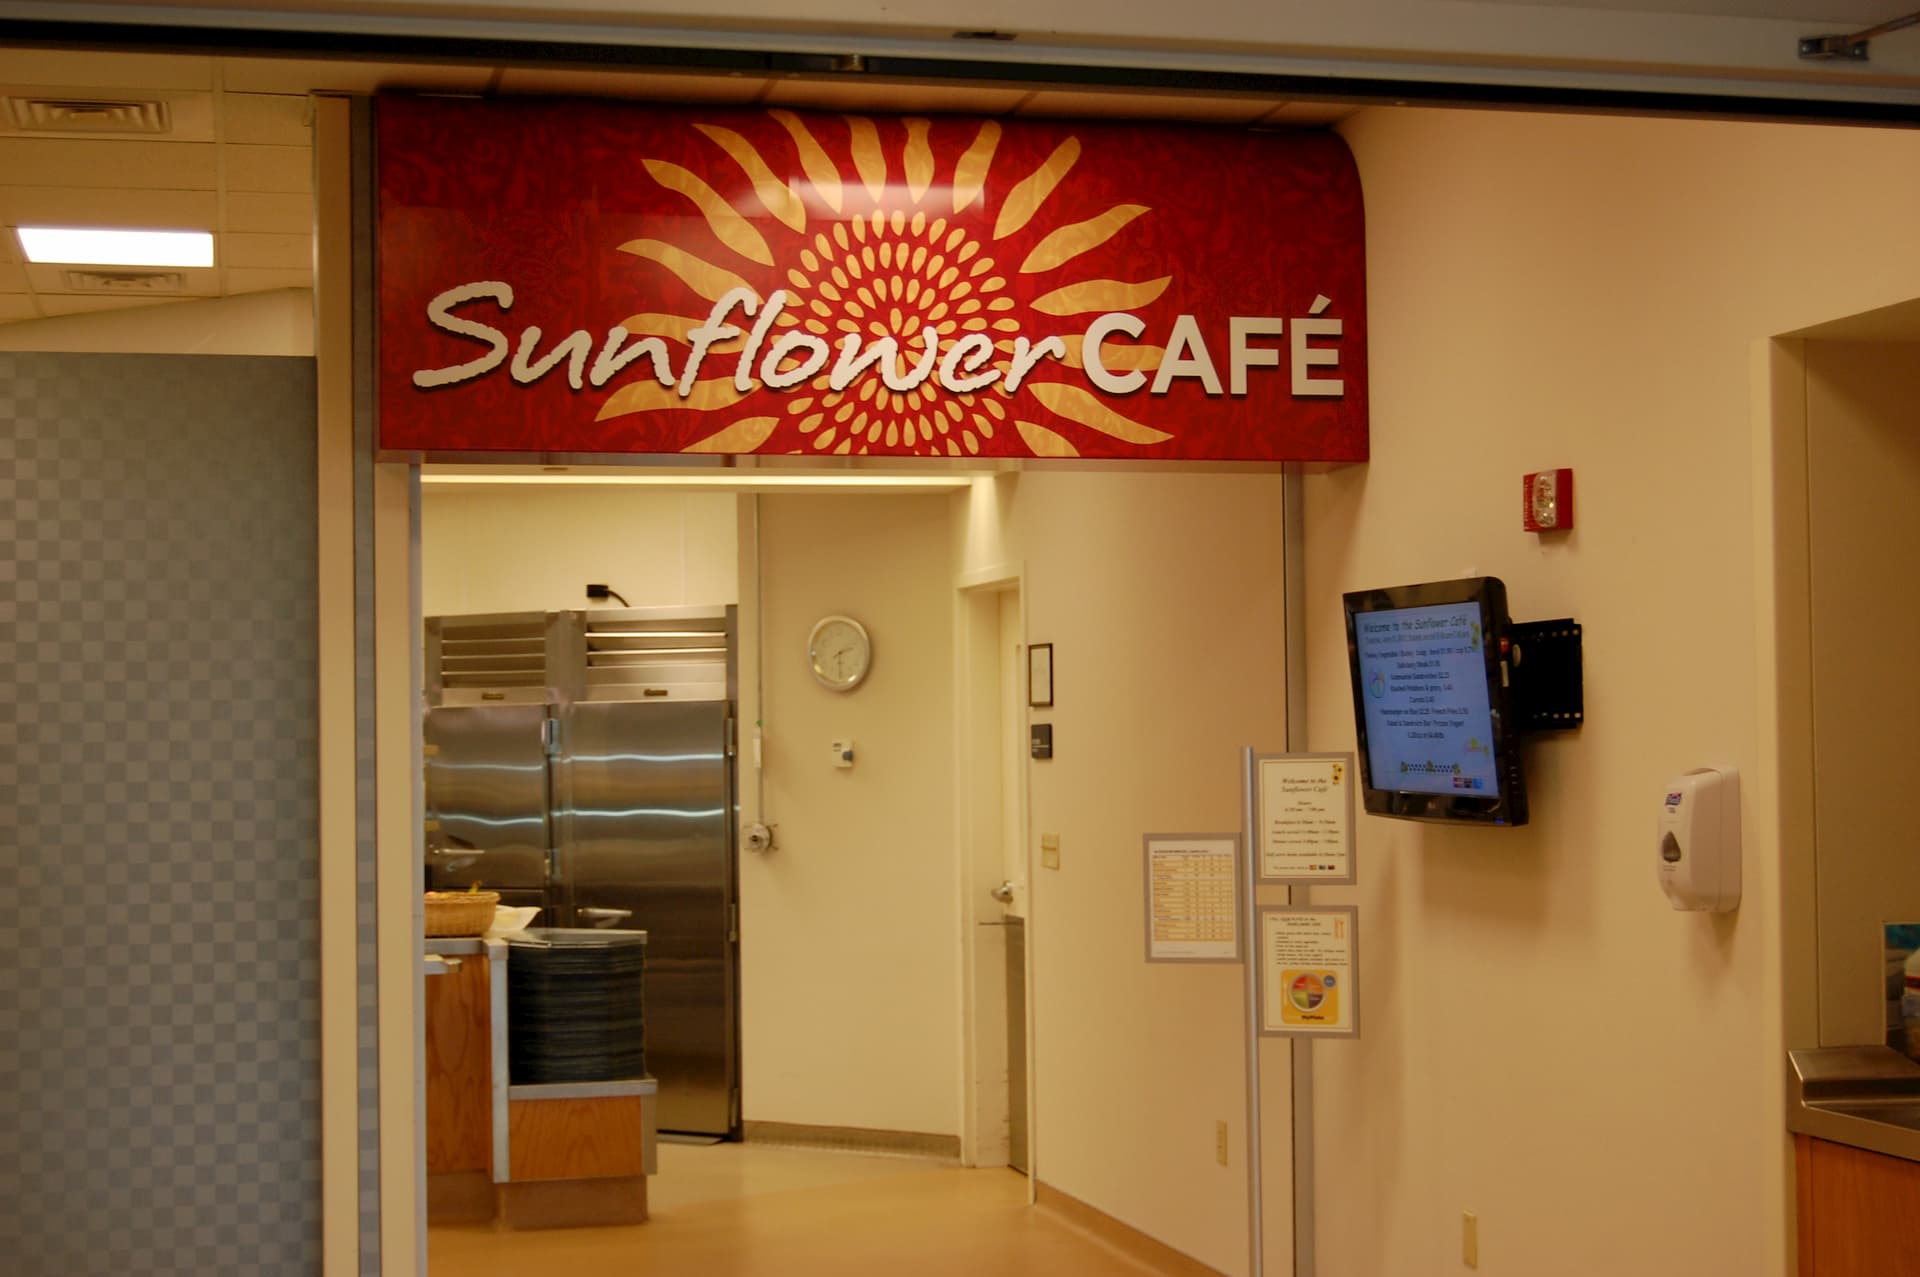 Entrance of sunflower cafe restaurant dining area at nmc health medical center in newton ks